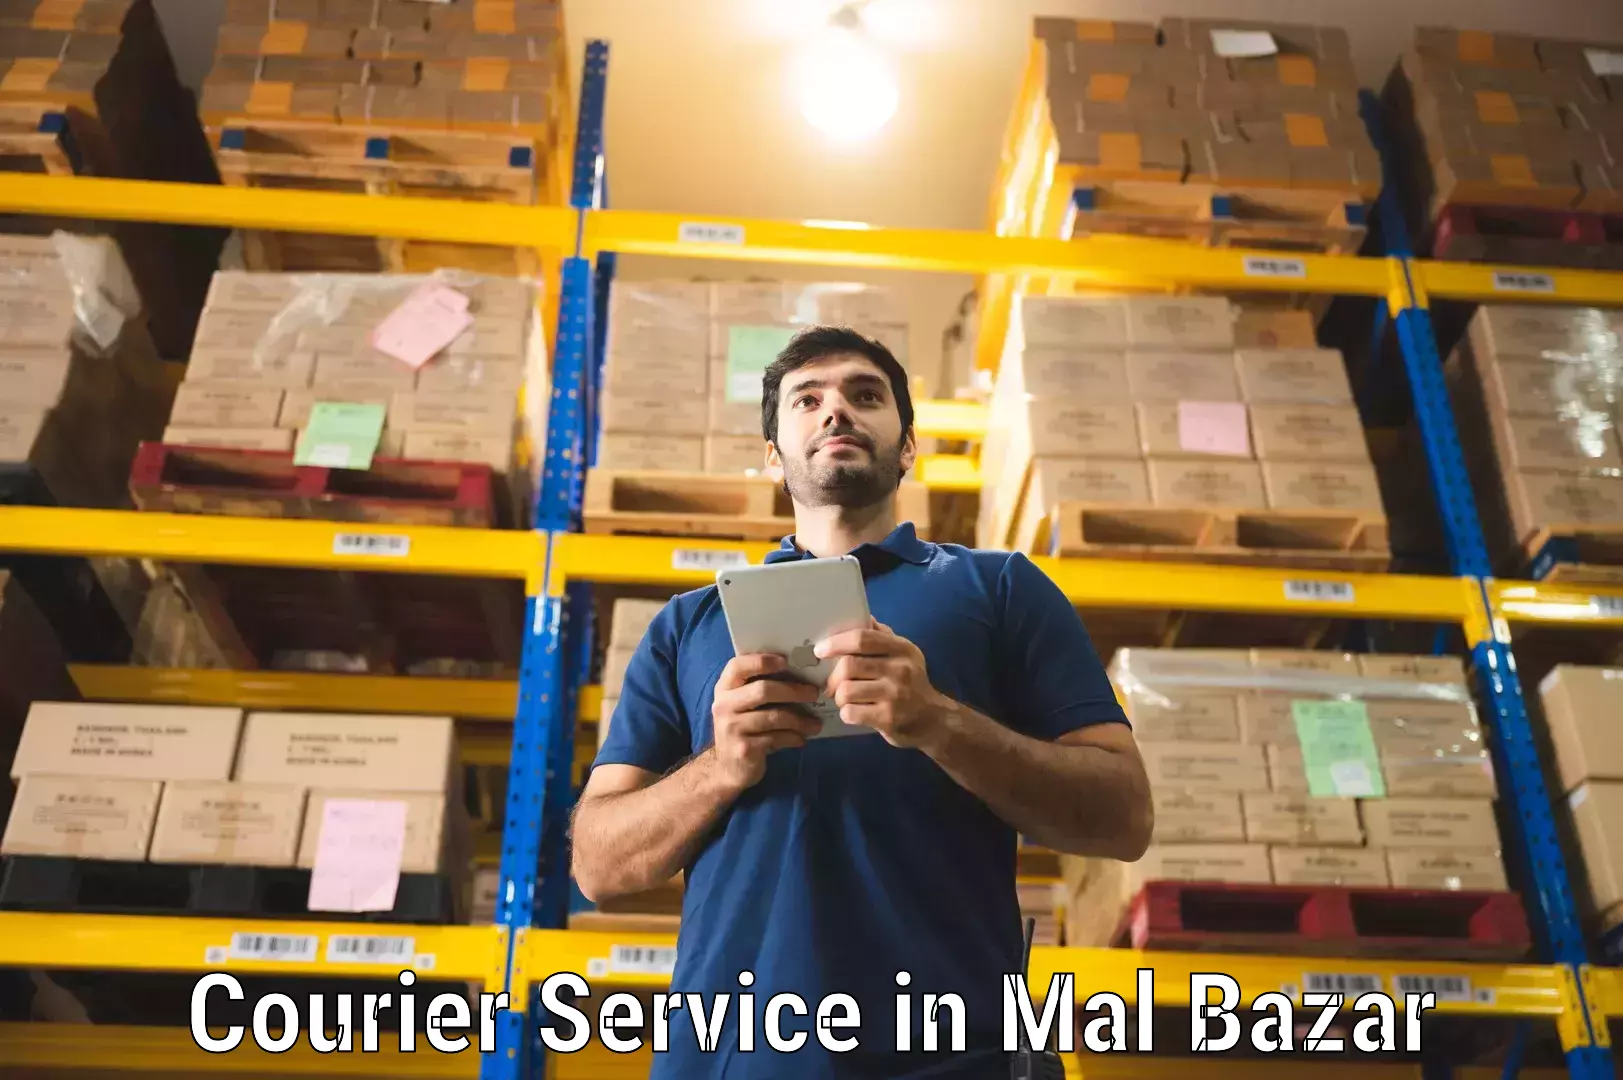 Express mail service in Mal Bazar